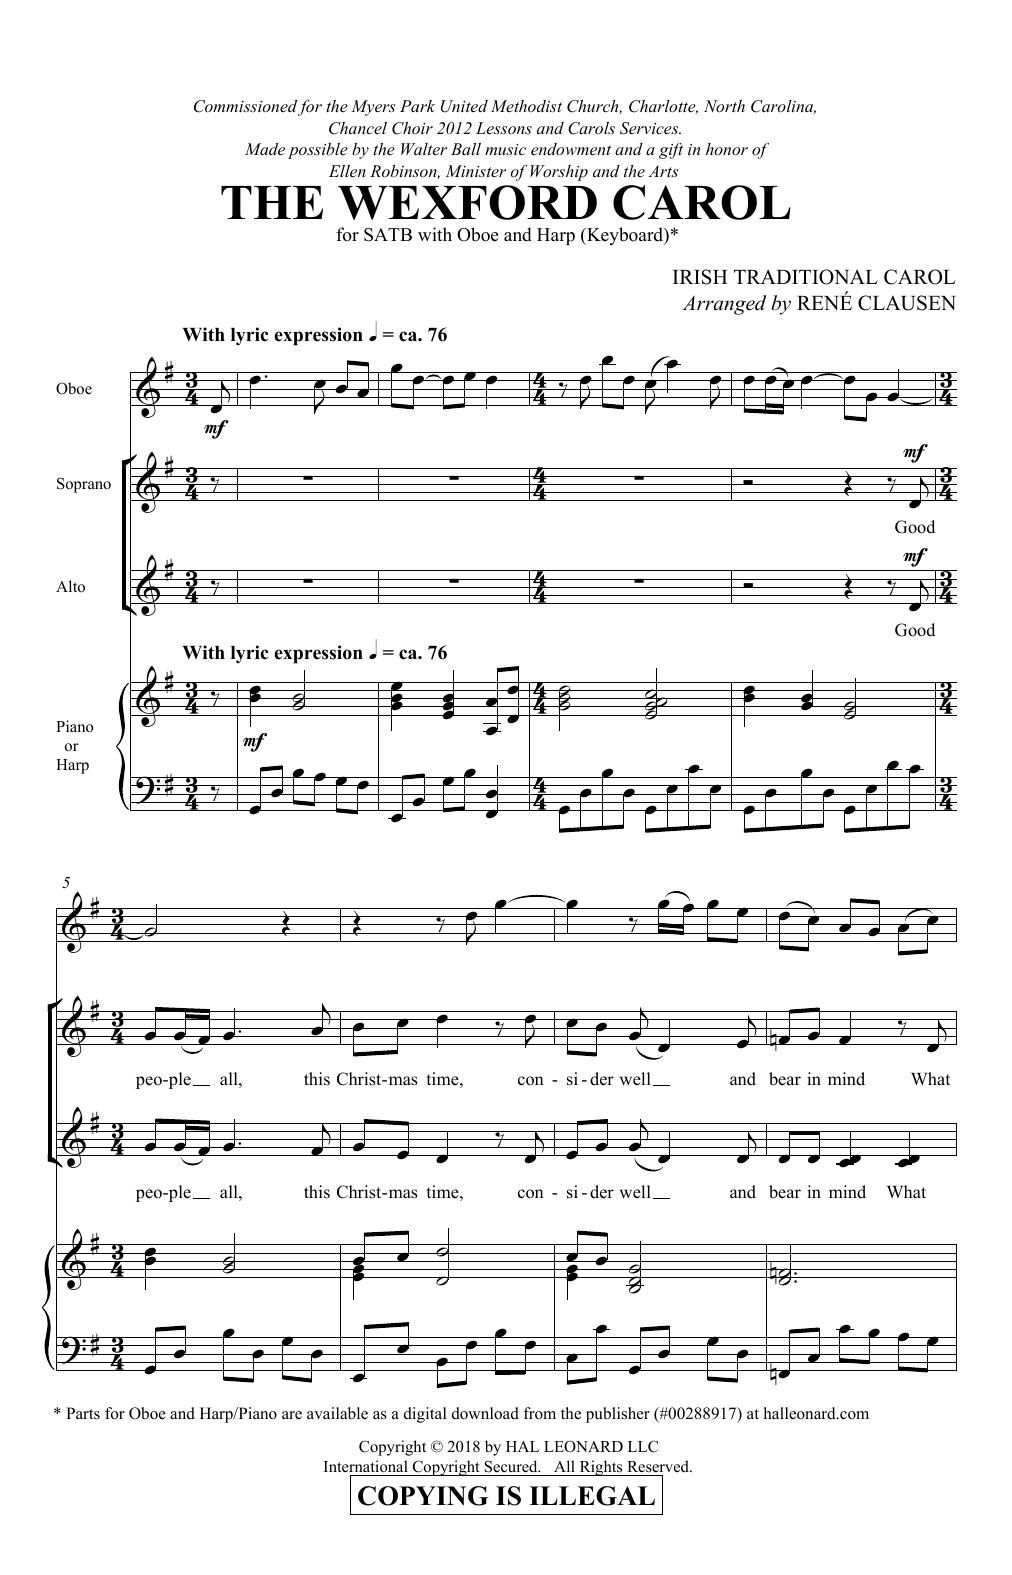 Traditional Irish Carol The Wexford Carol (arr. Rene Clausen) sheet music notes and chords arranged for SATB Choir